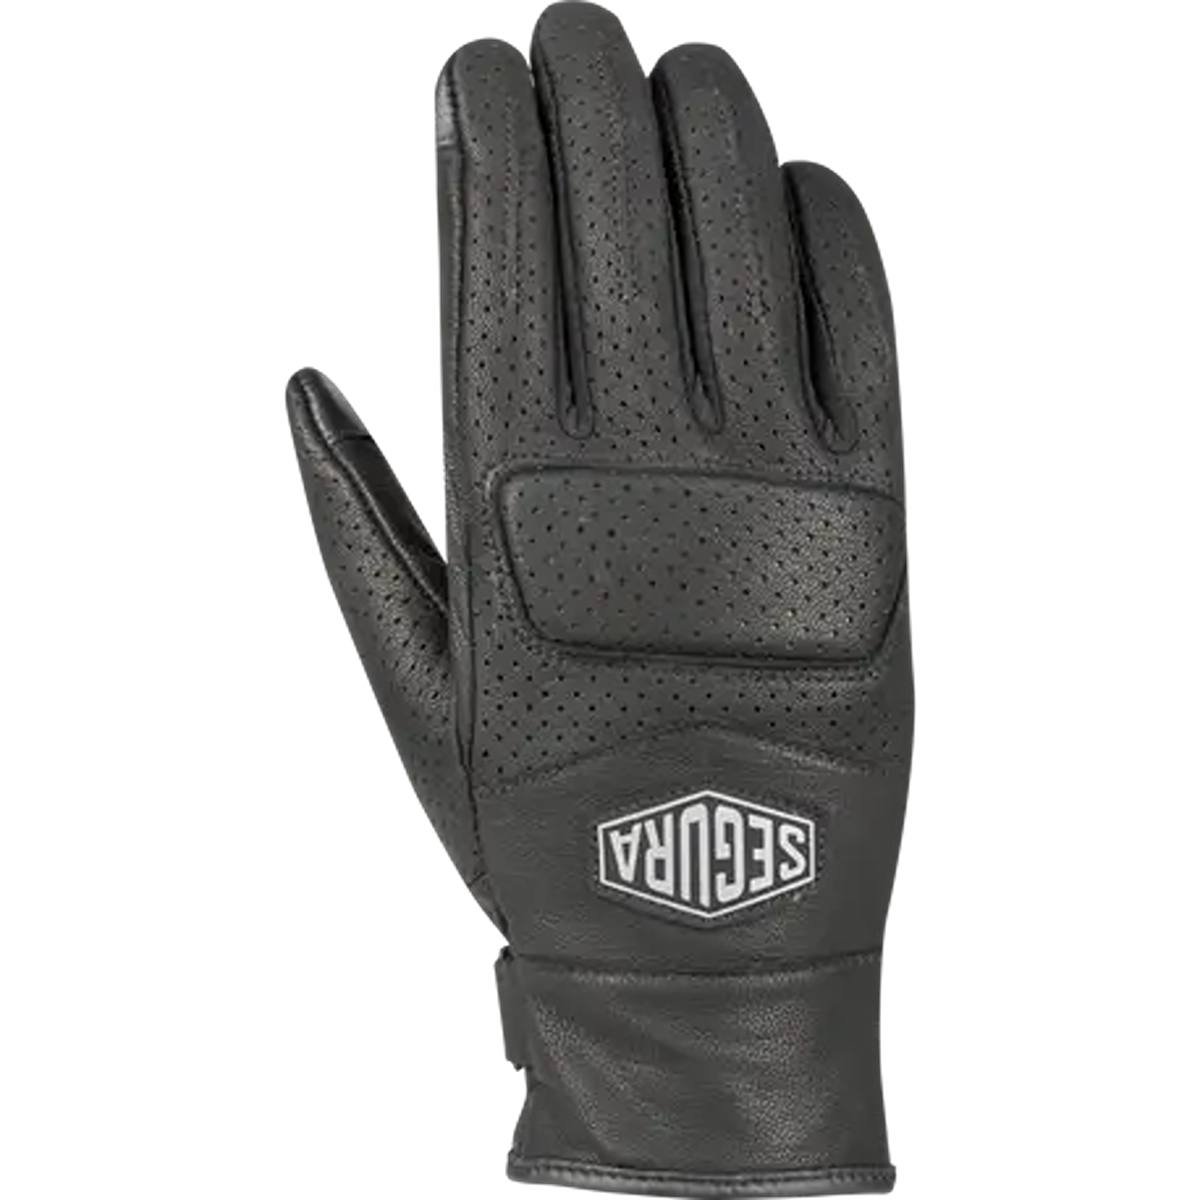 Image of Segura Lady Bogart Gloves Black Taille T6